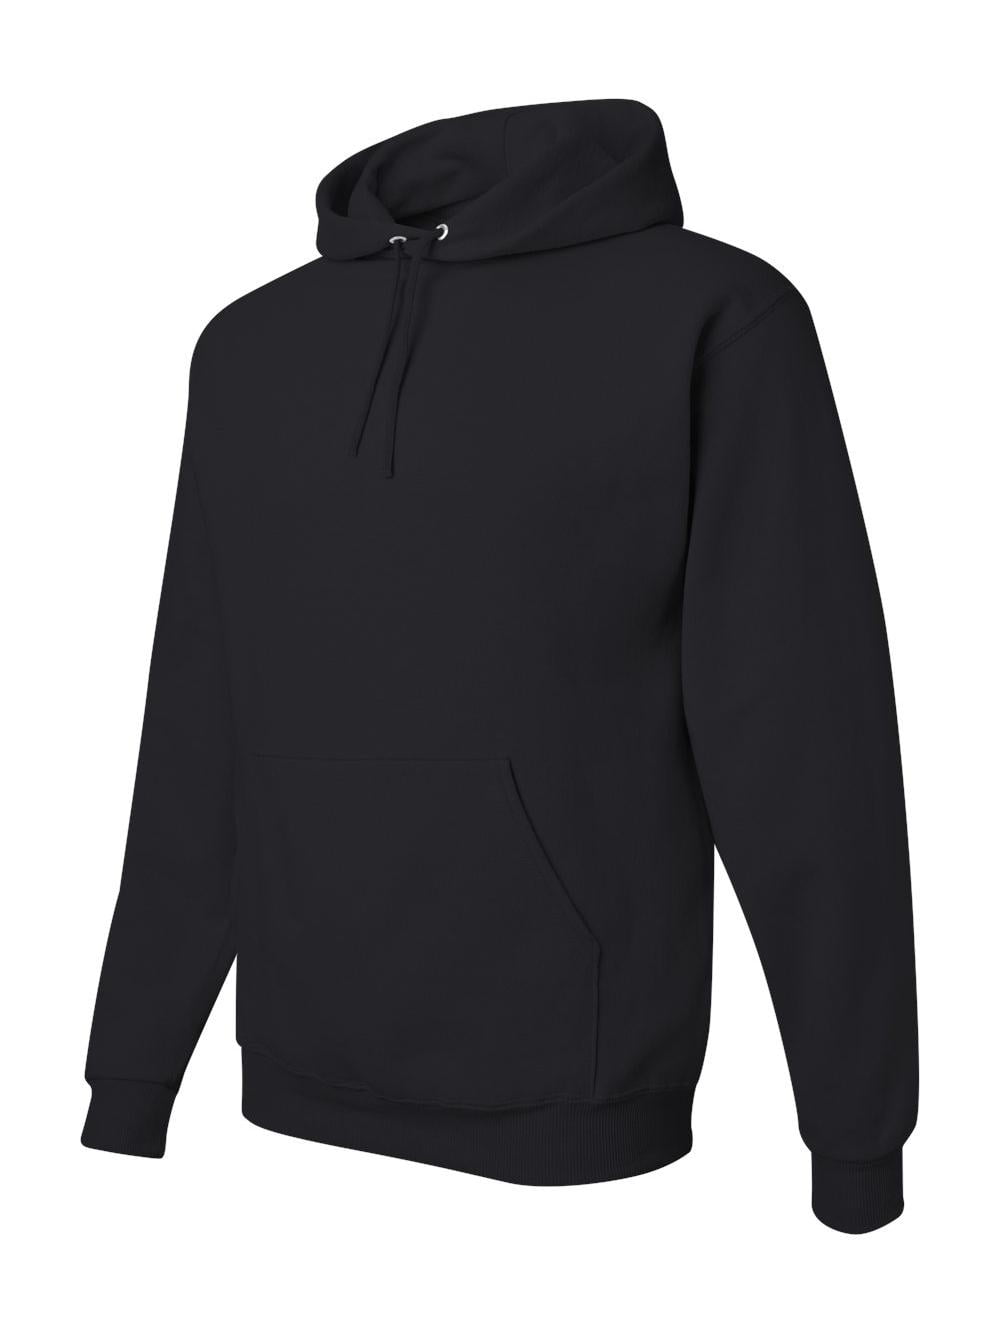 JERZEES - JERZEES - NuBlend Hooded Sweatshirt - 996MR - Walmart.com ...